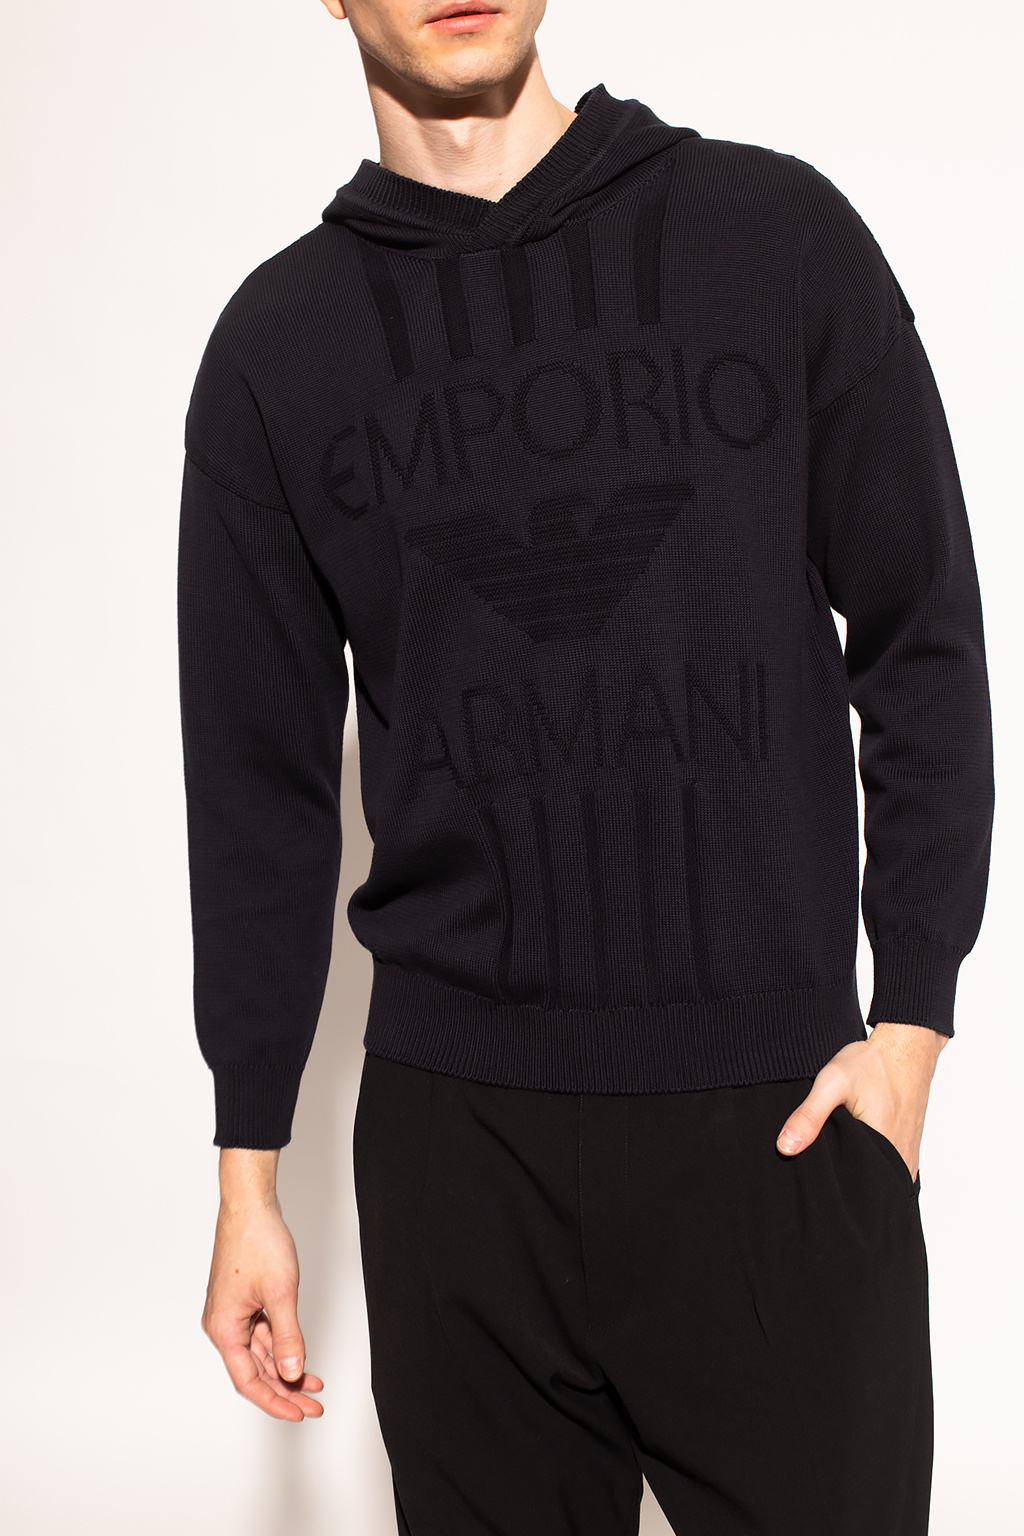 Emporio Armani Hooded sweater